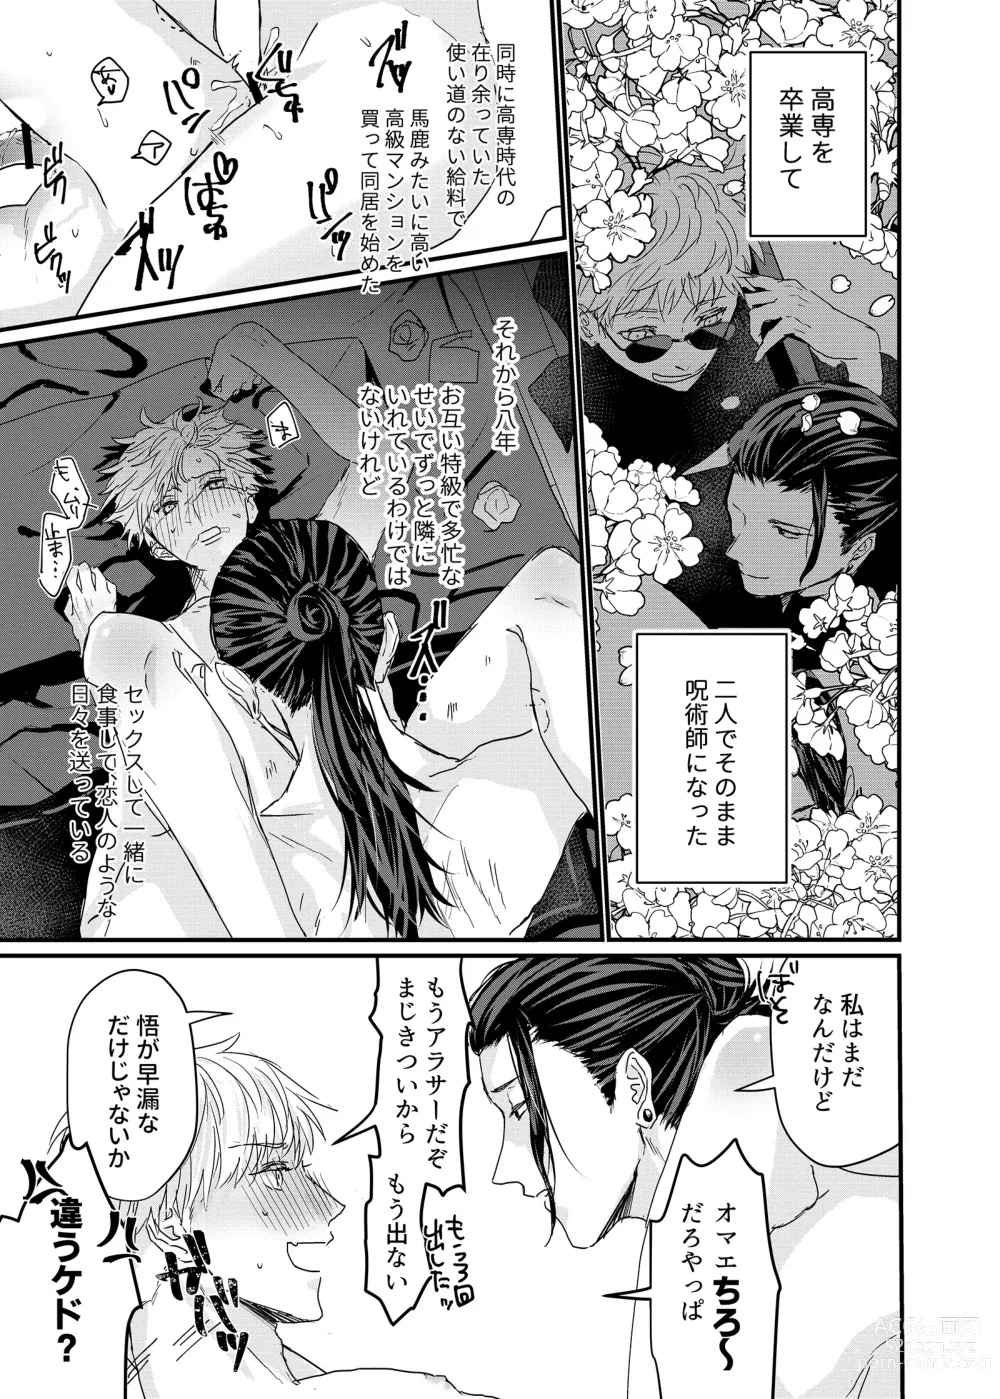 Page 8 of doujinshi Manjushage no Yume no Naka